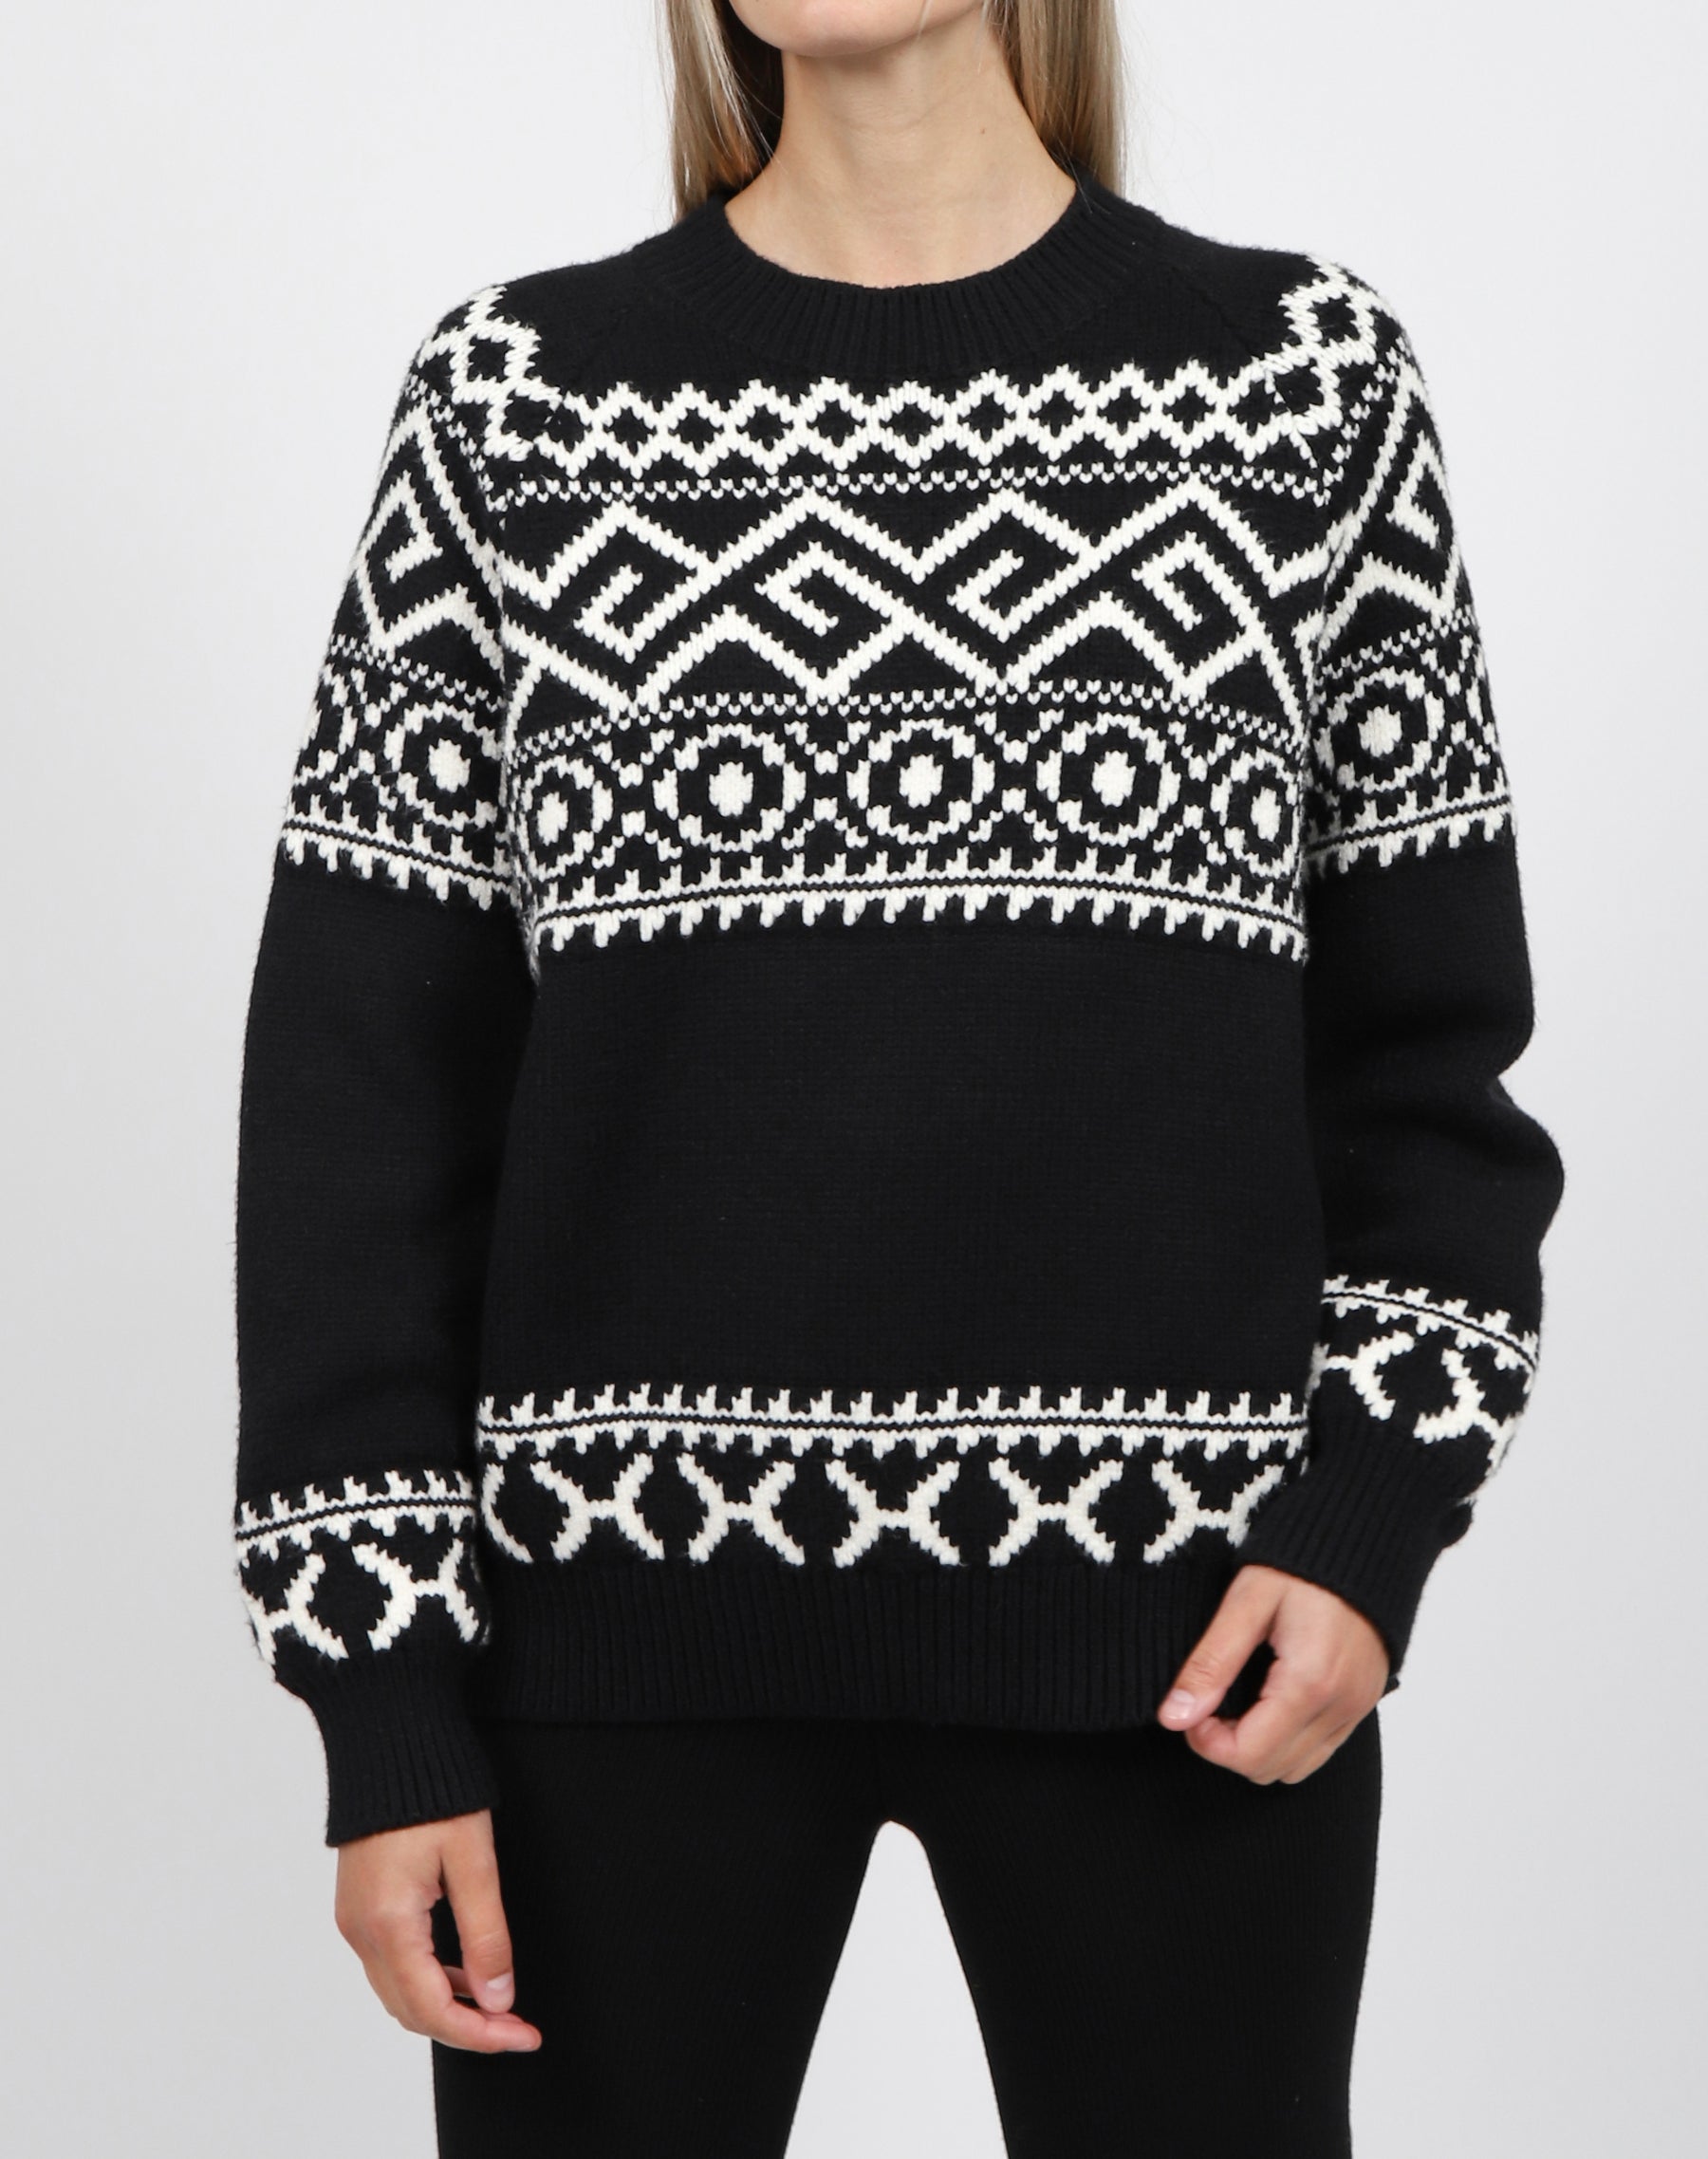 Brunette The Label Fair Isle Knit Sweater Black